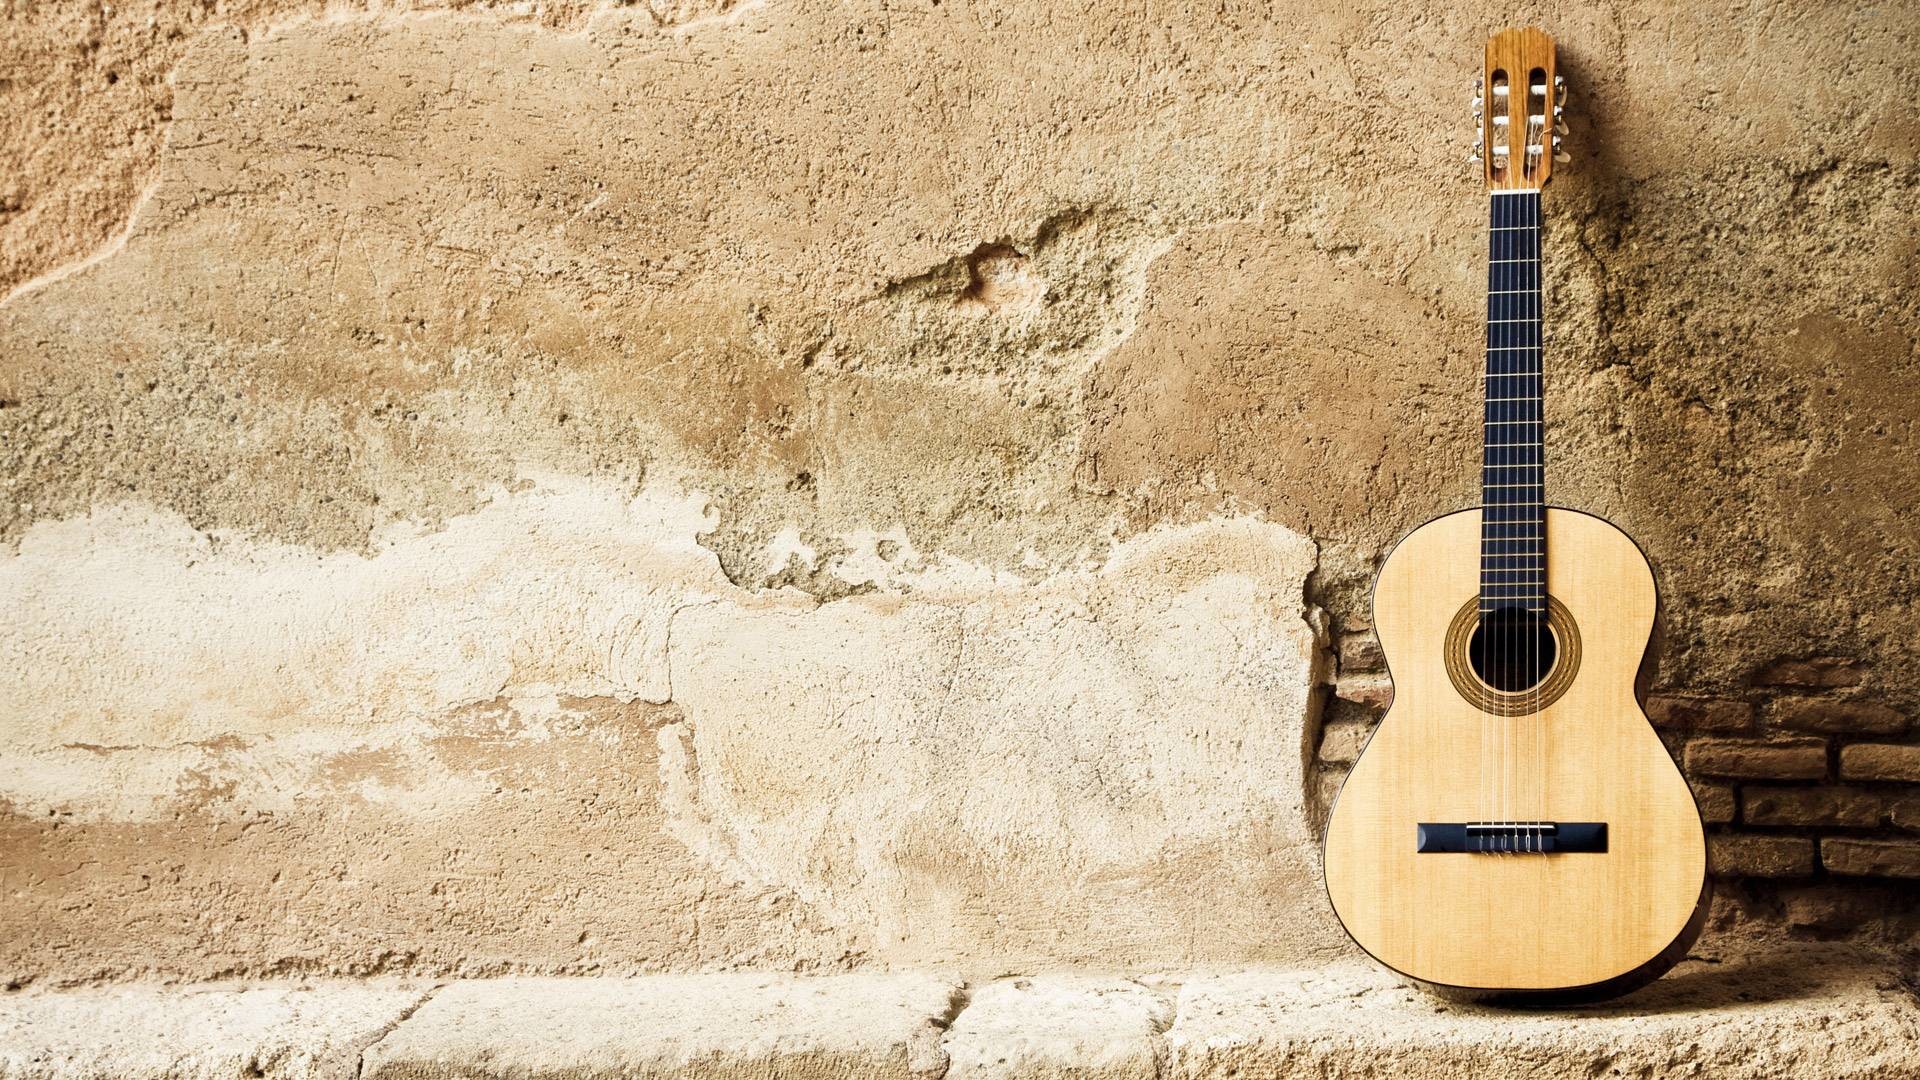 chitarra acustica wallpaper hd,chitarra,strumento musicale,strumenti a corda pizzicati,chitarra acustica,accessorio per strumento a corda